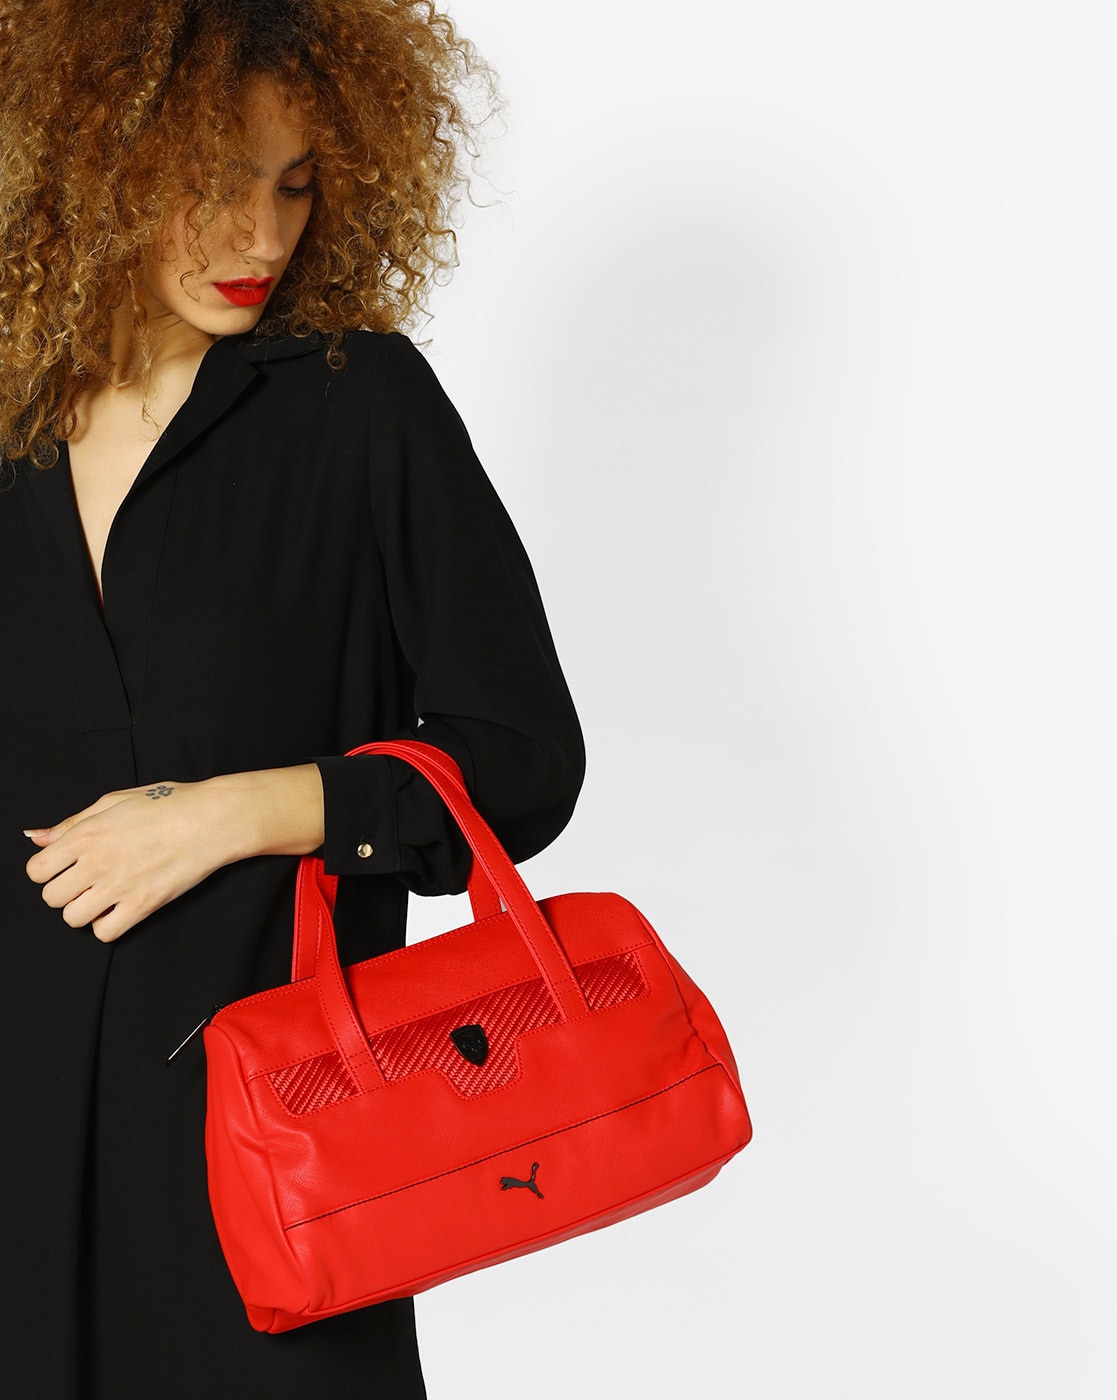 Ferrari Handbag #ferraristore #ferrari #handbag #puma | Bags, Handbag,  Womens tote bags